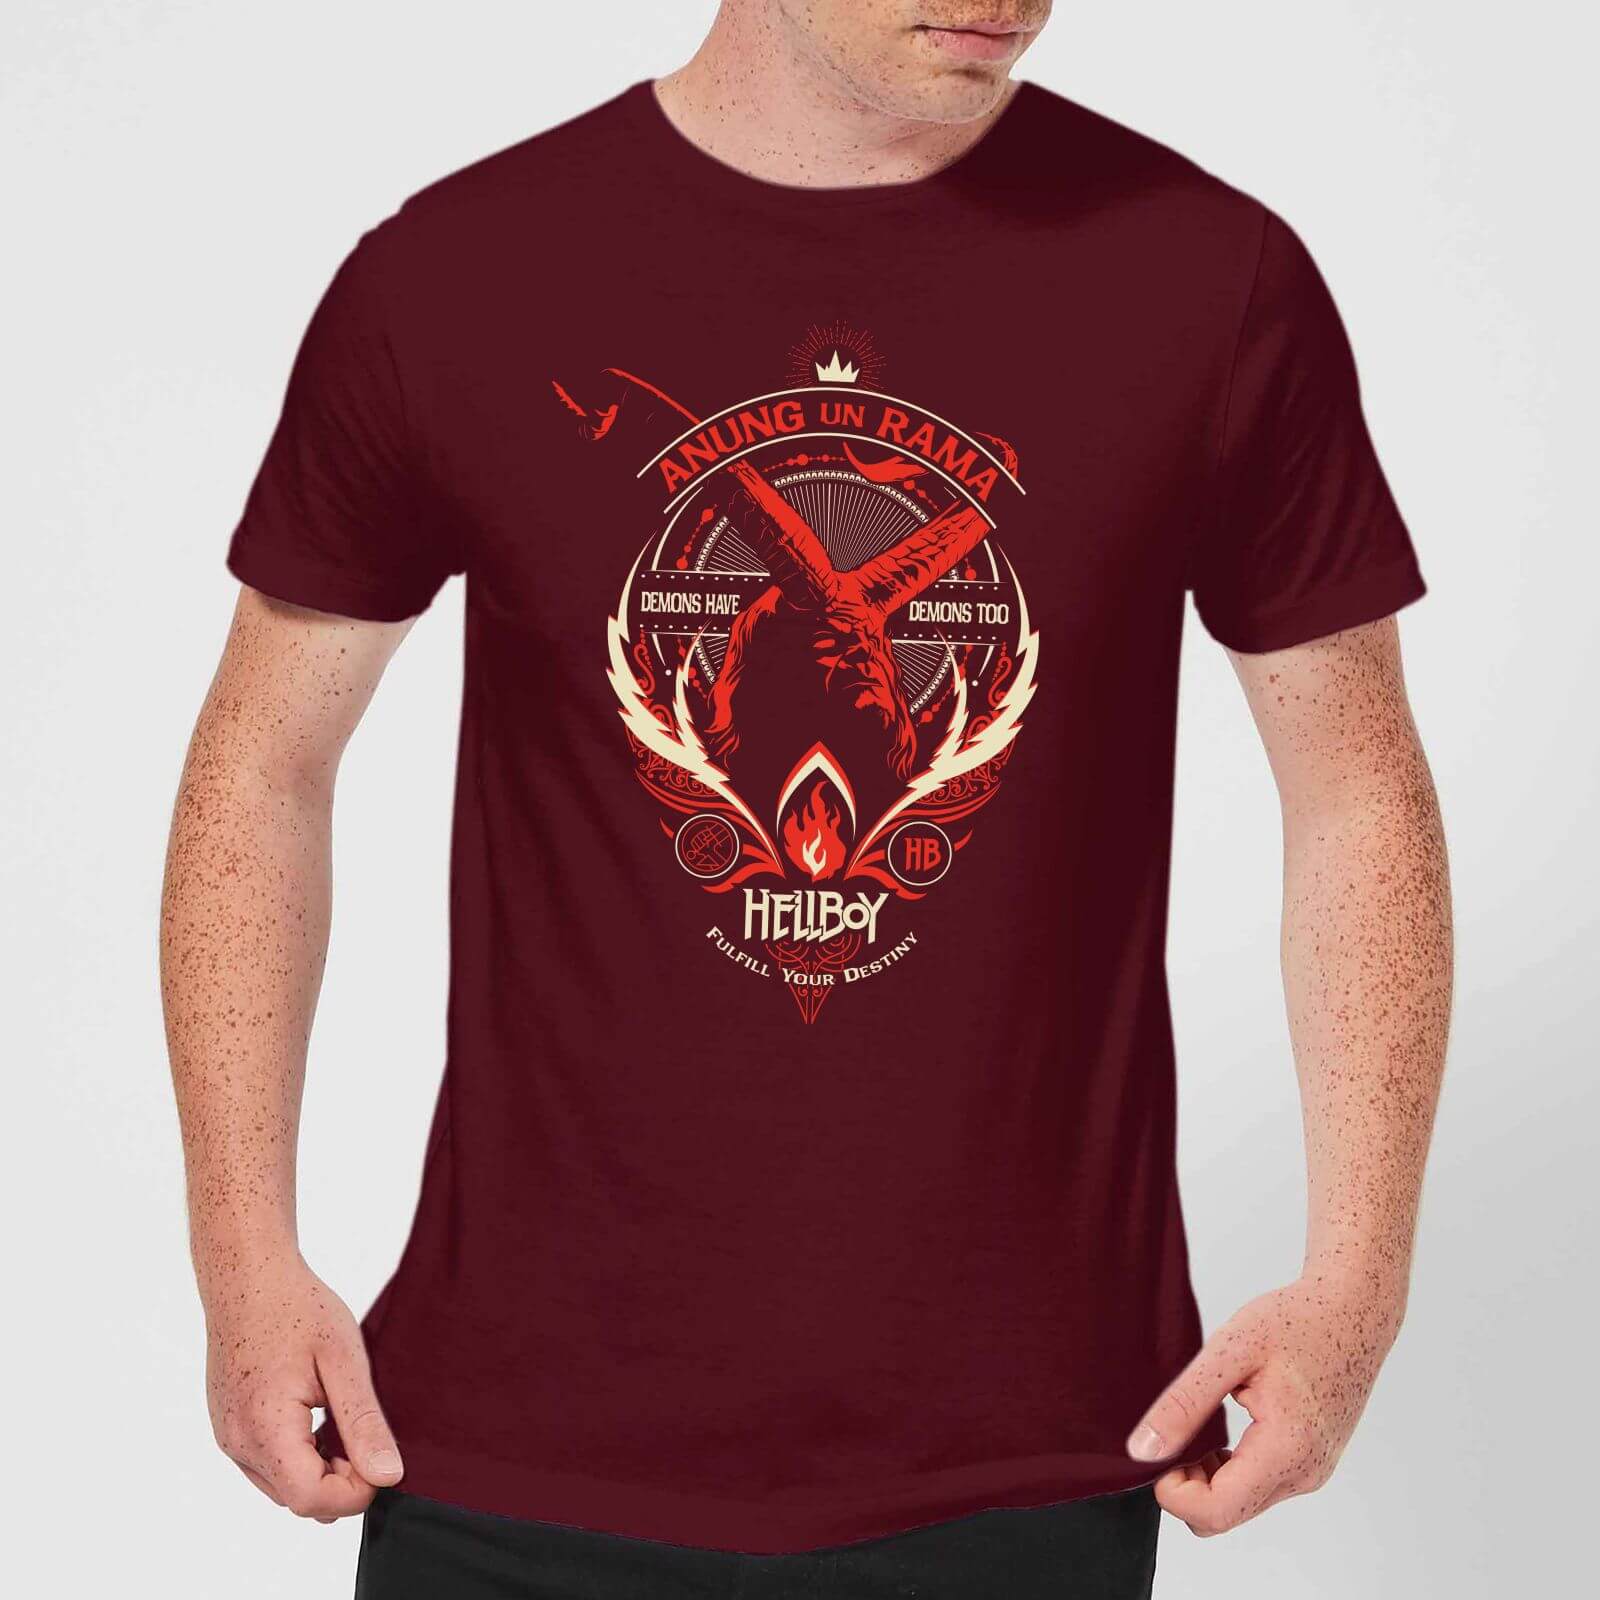 Hellboy Anung Un Rama Men's T-Shirt - Burgundy - M - Burgundy